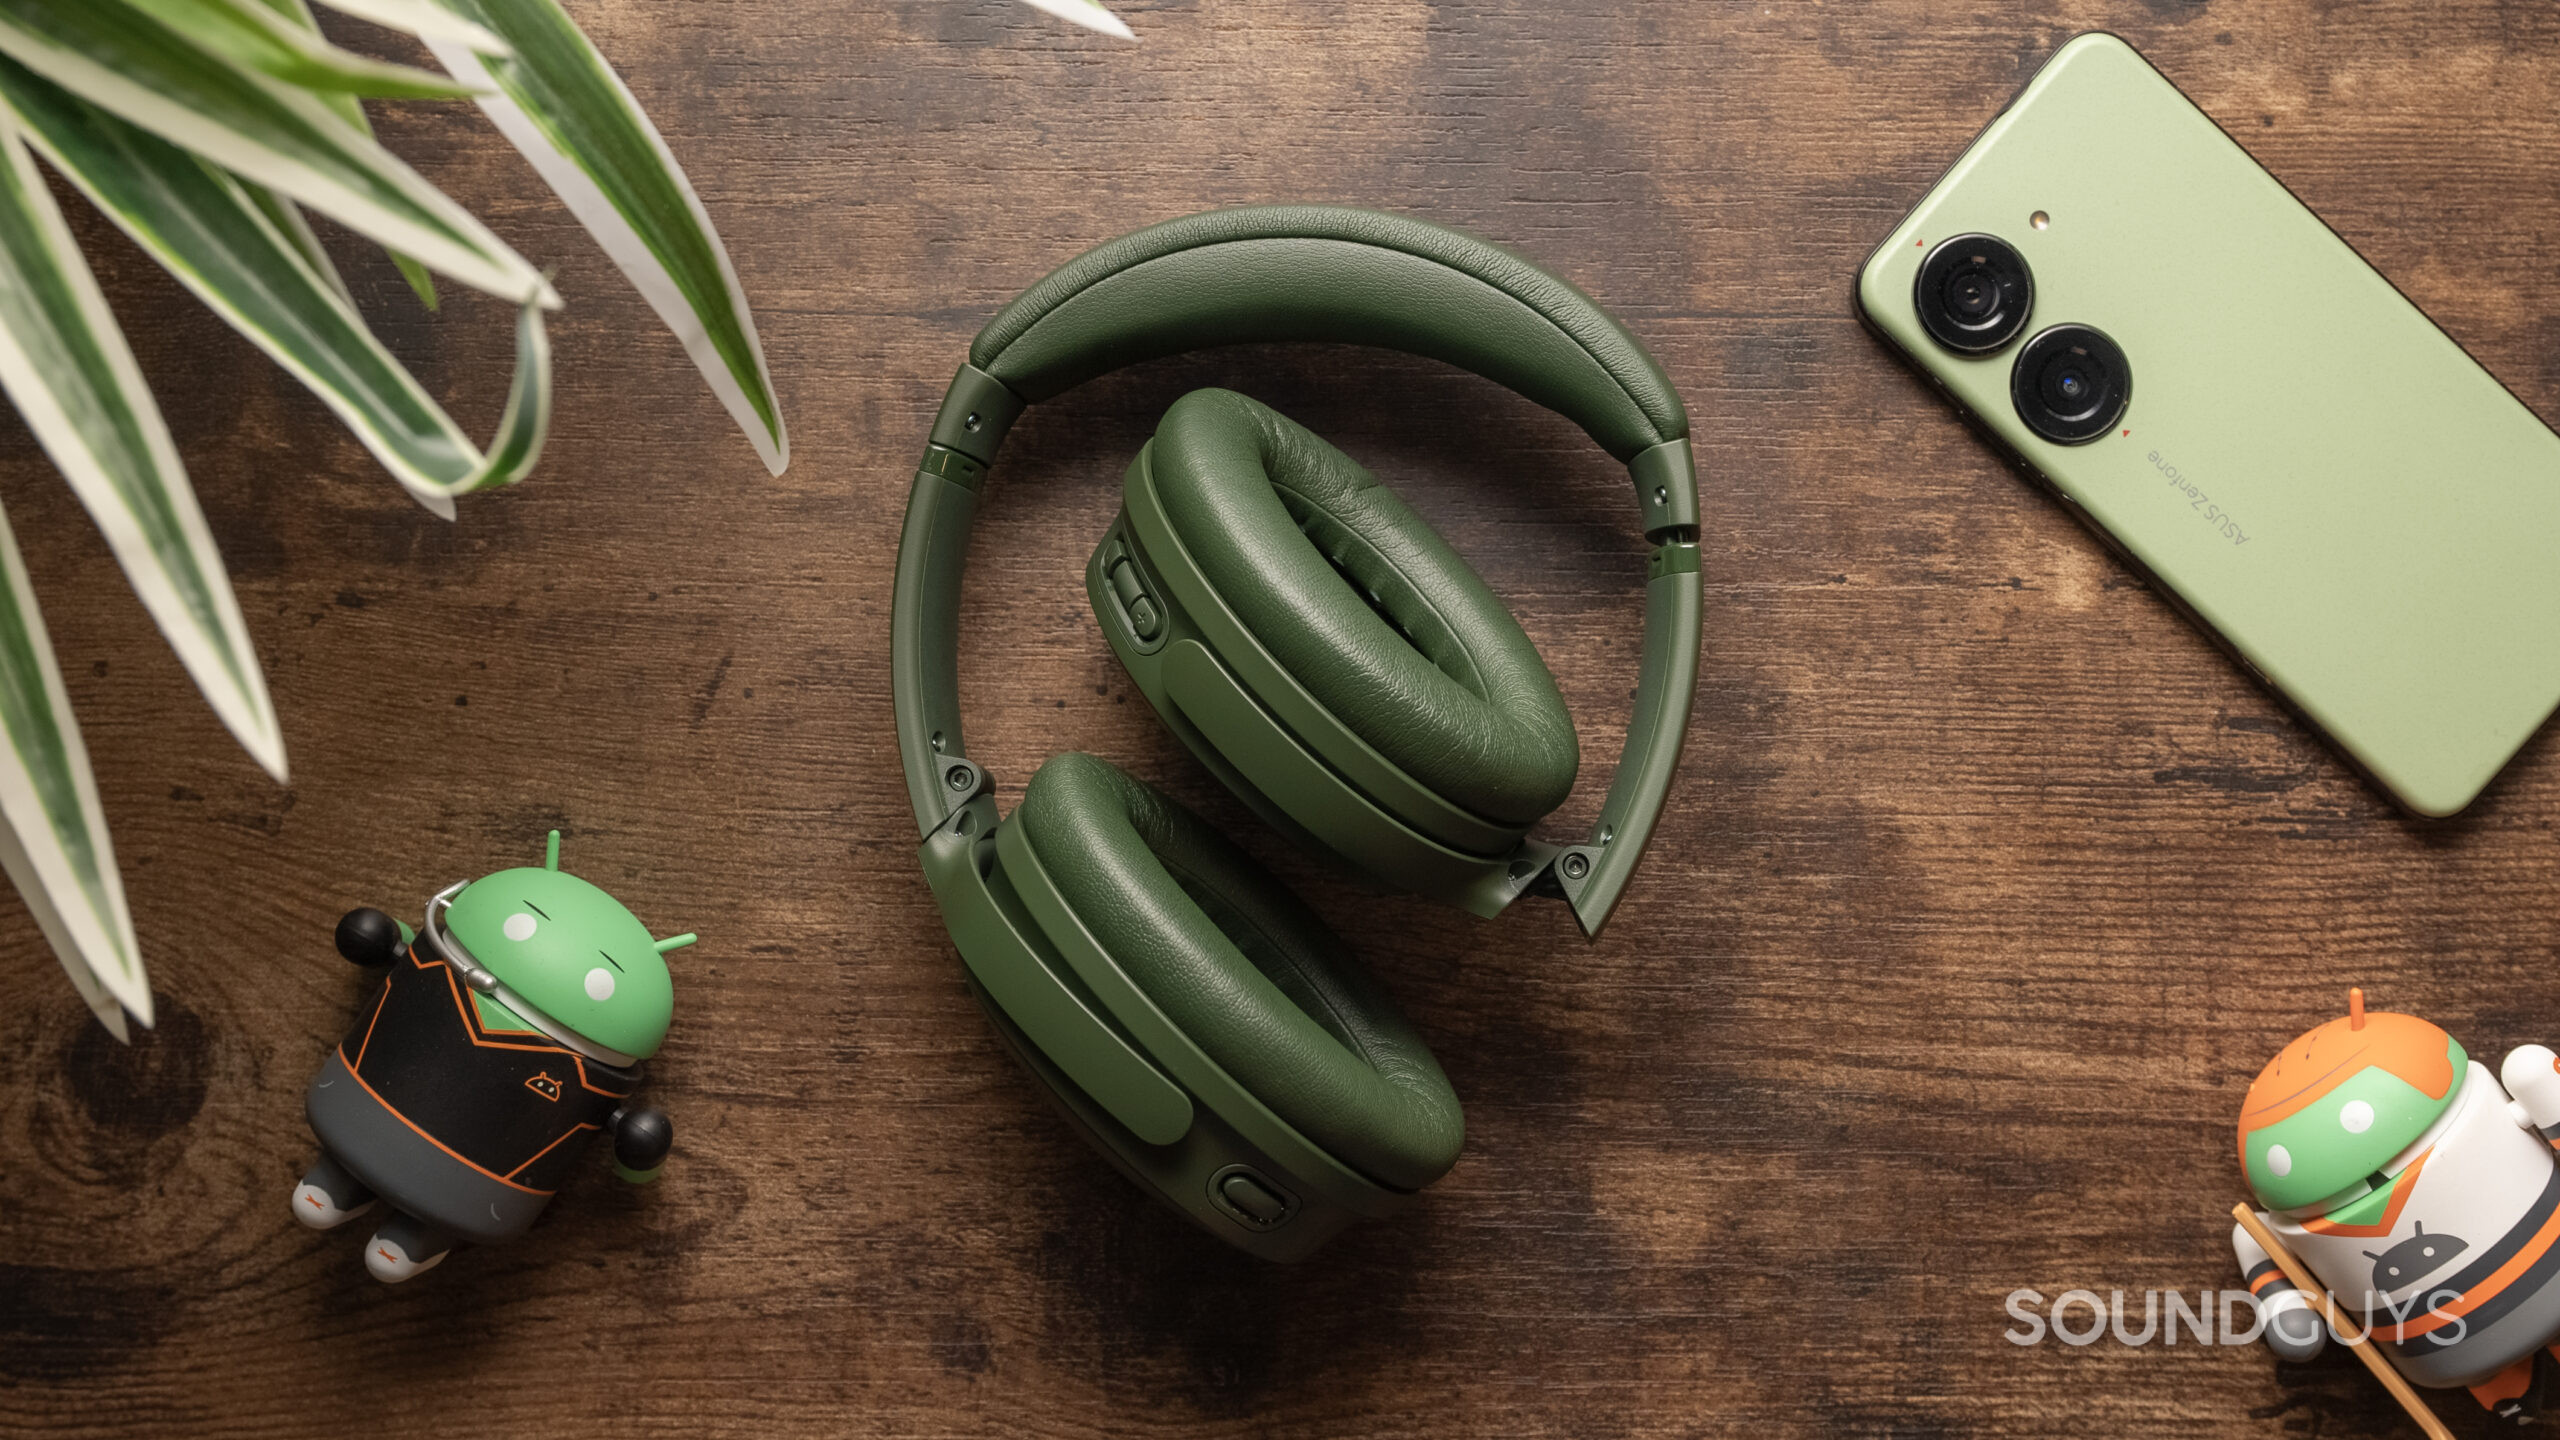 The Bose QuietComfort Headphones fold up nicely.